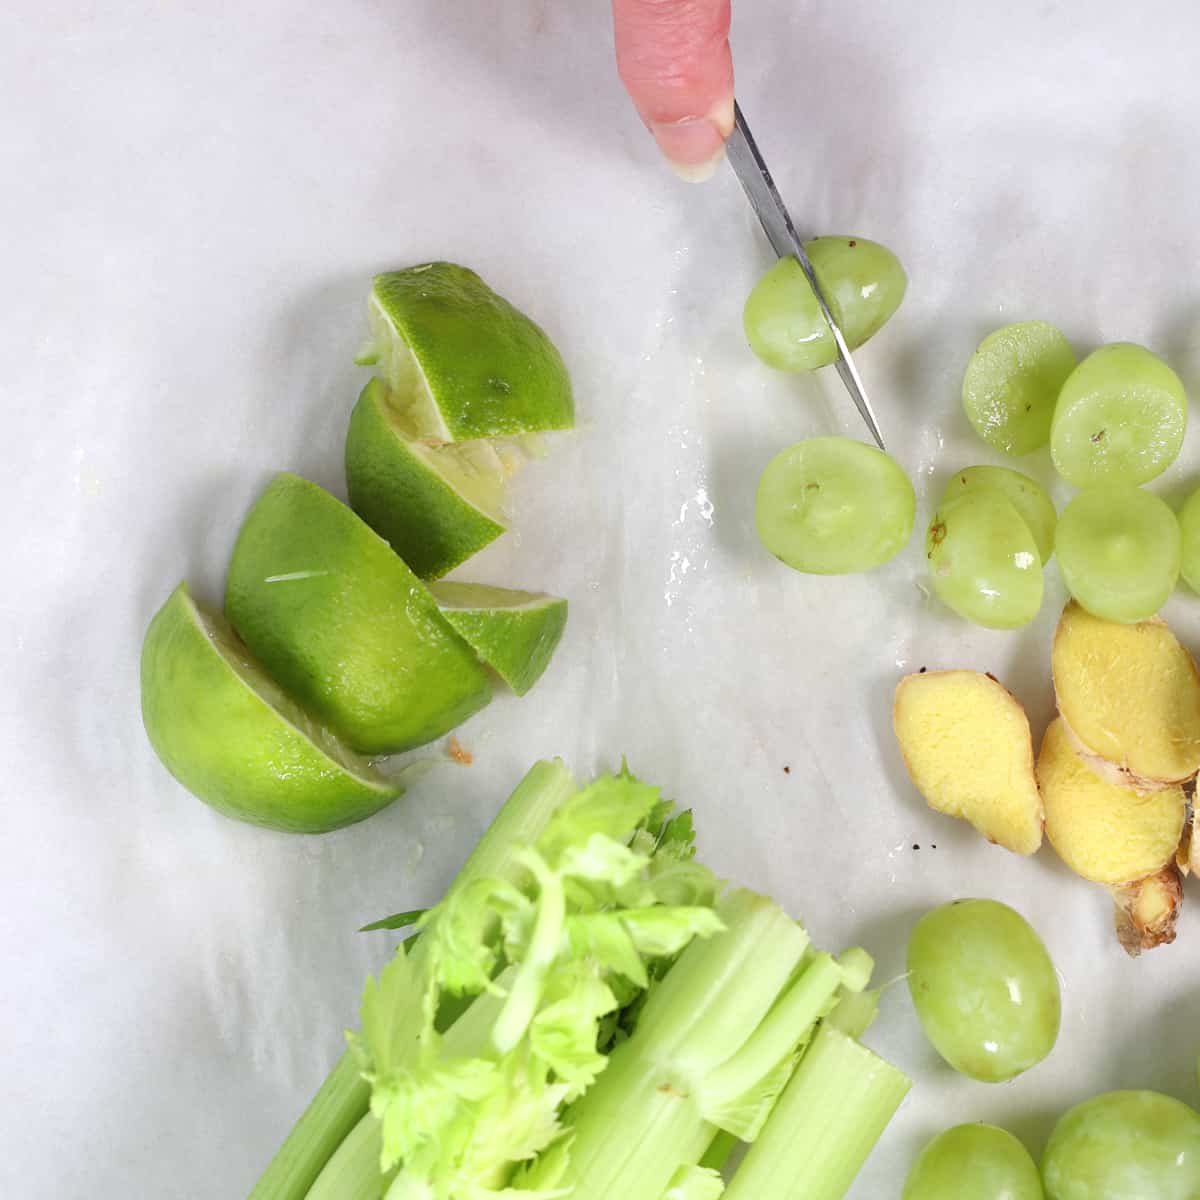 Celery Juice Recipe | Six Health Benefits